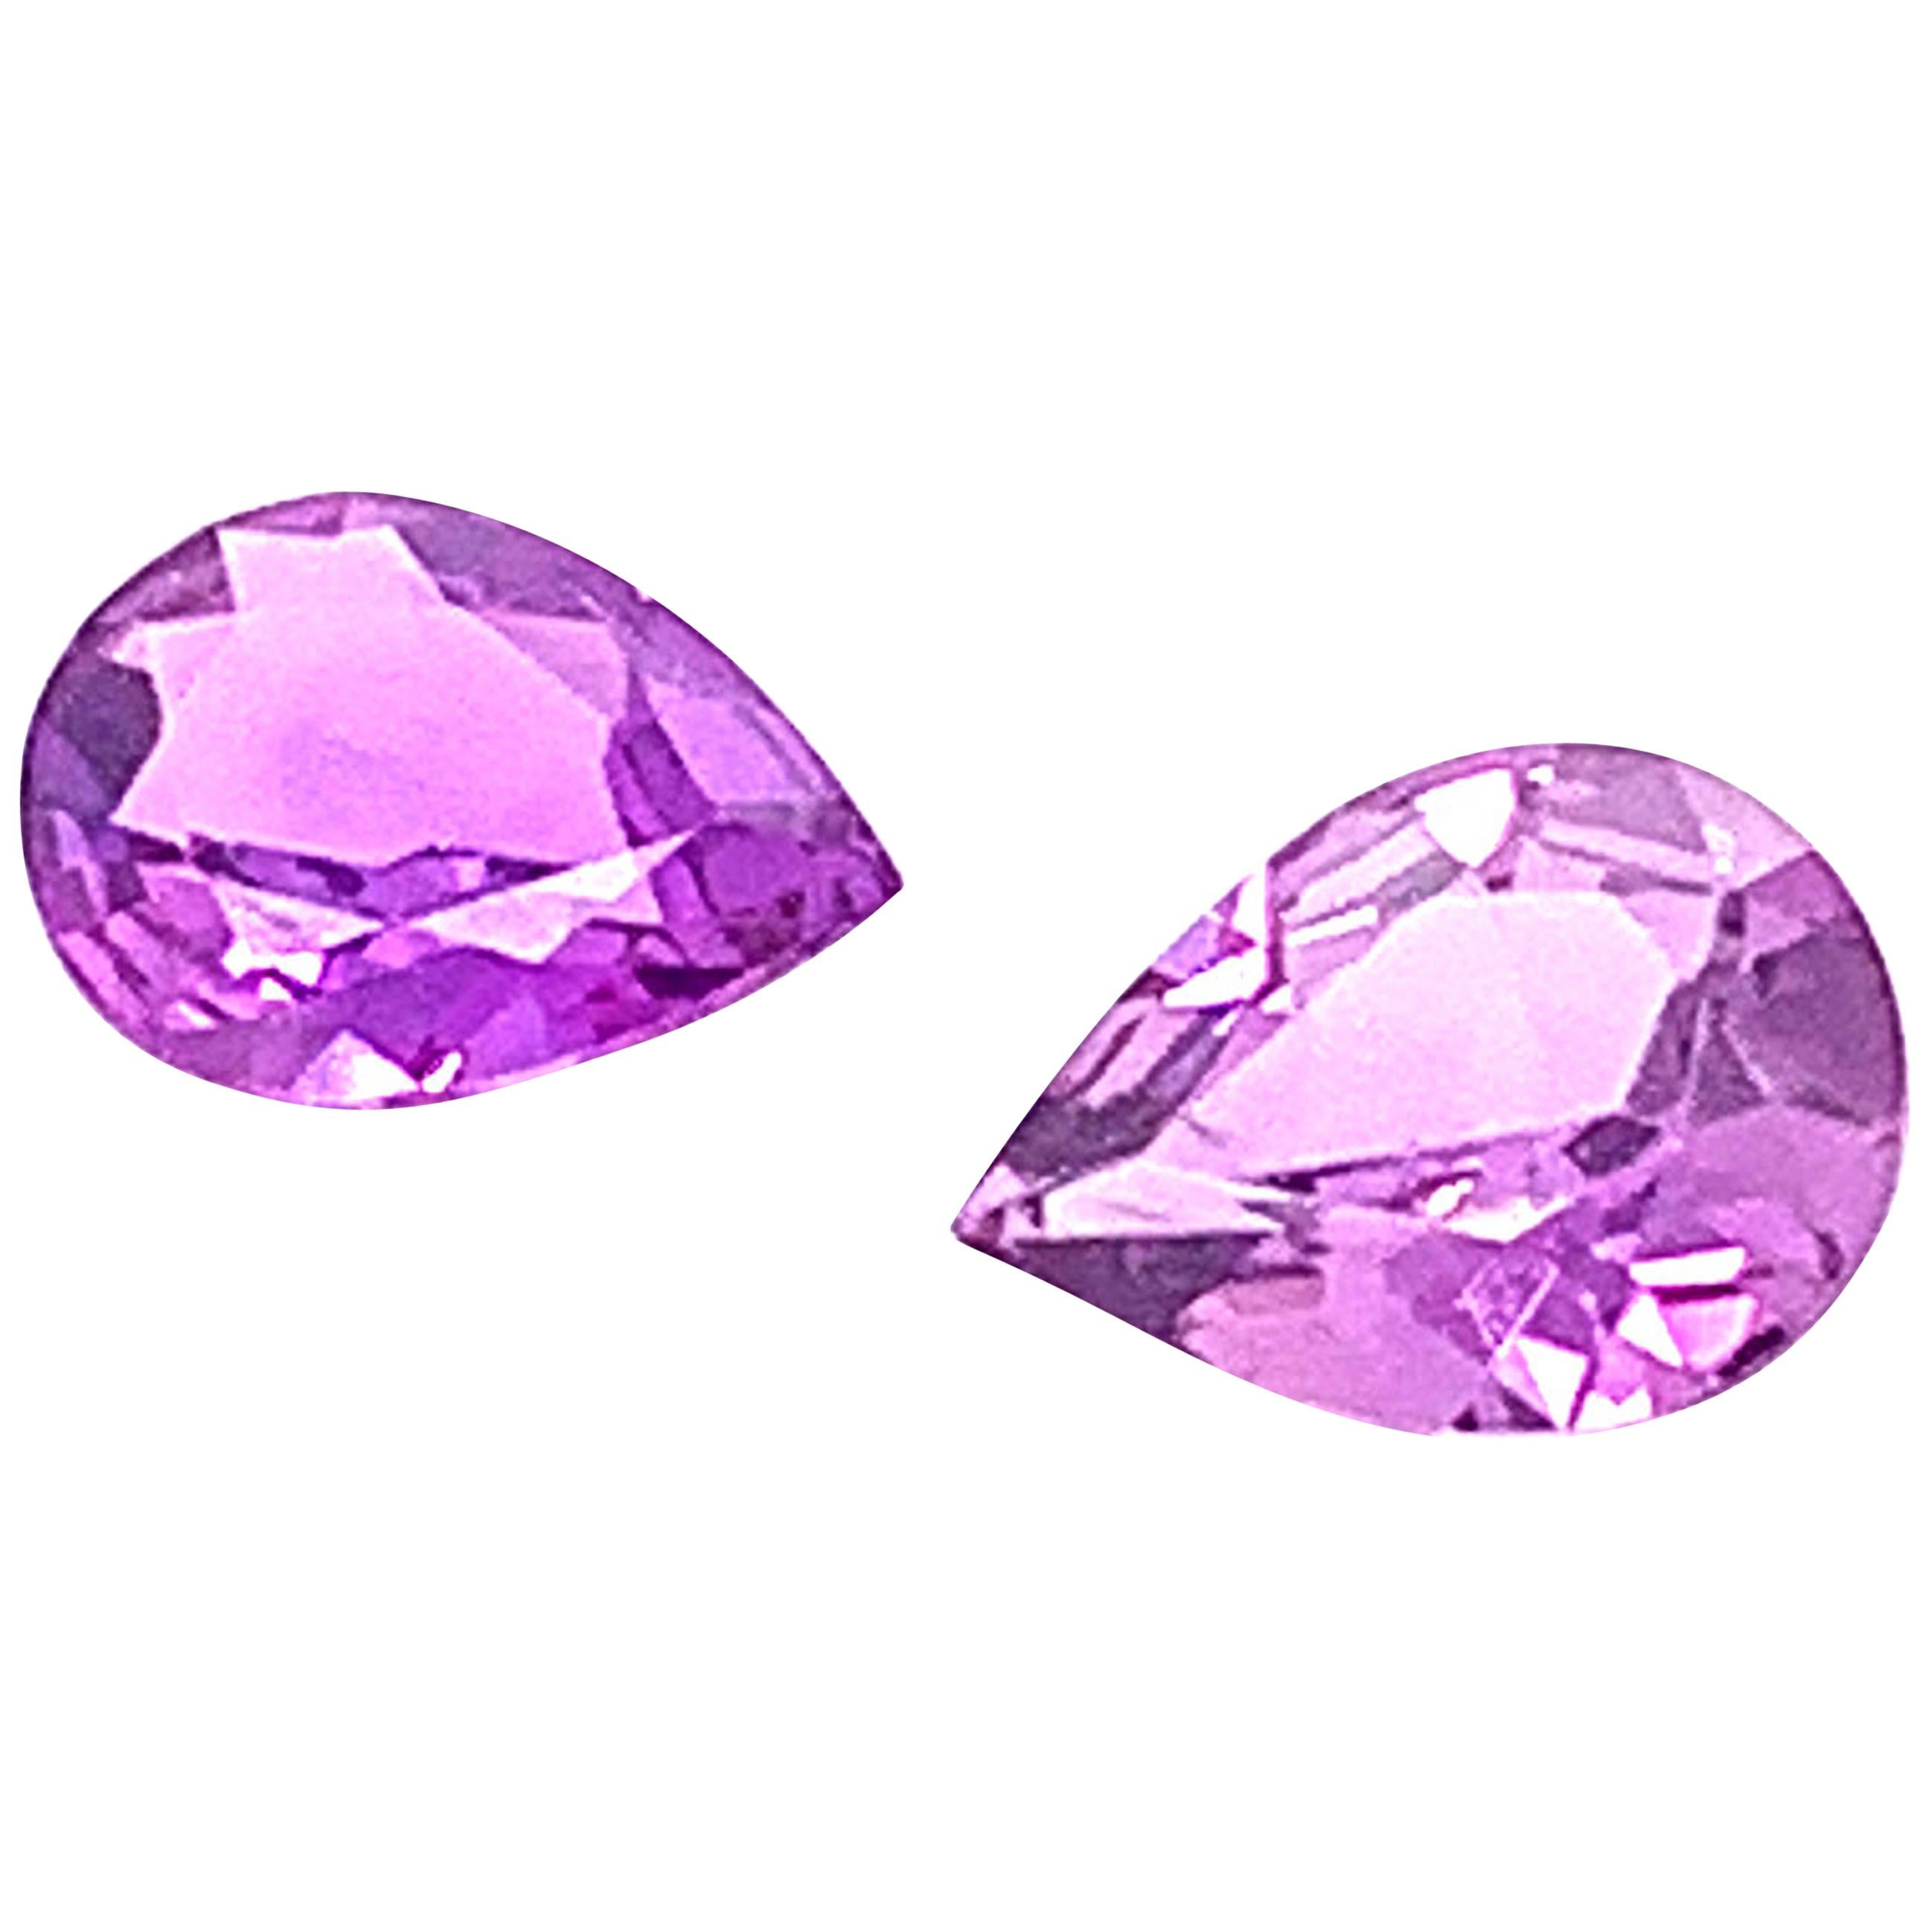 1.45 Carat Pear Shaped Purple Sapphire, Pair For Sale